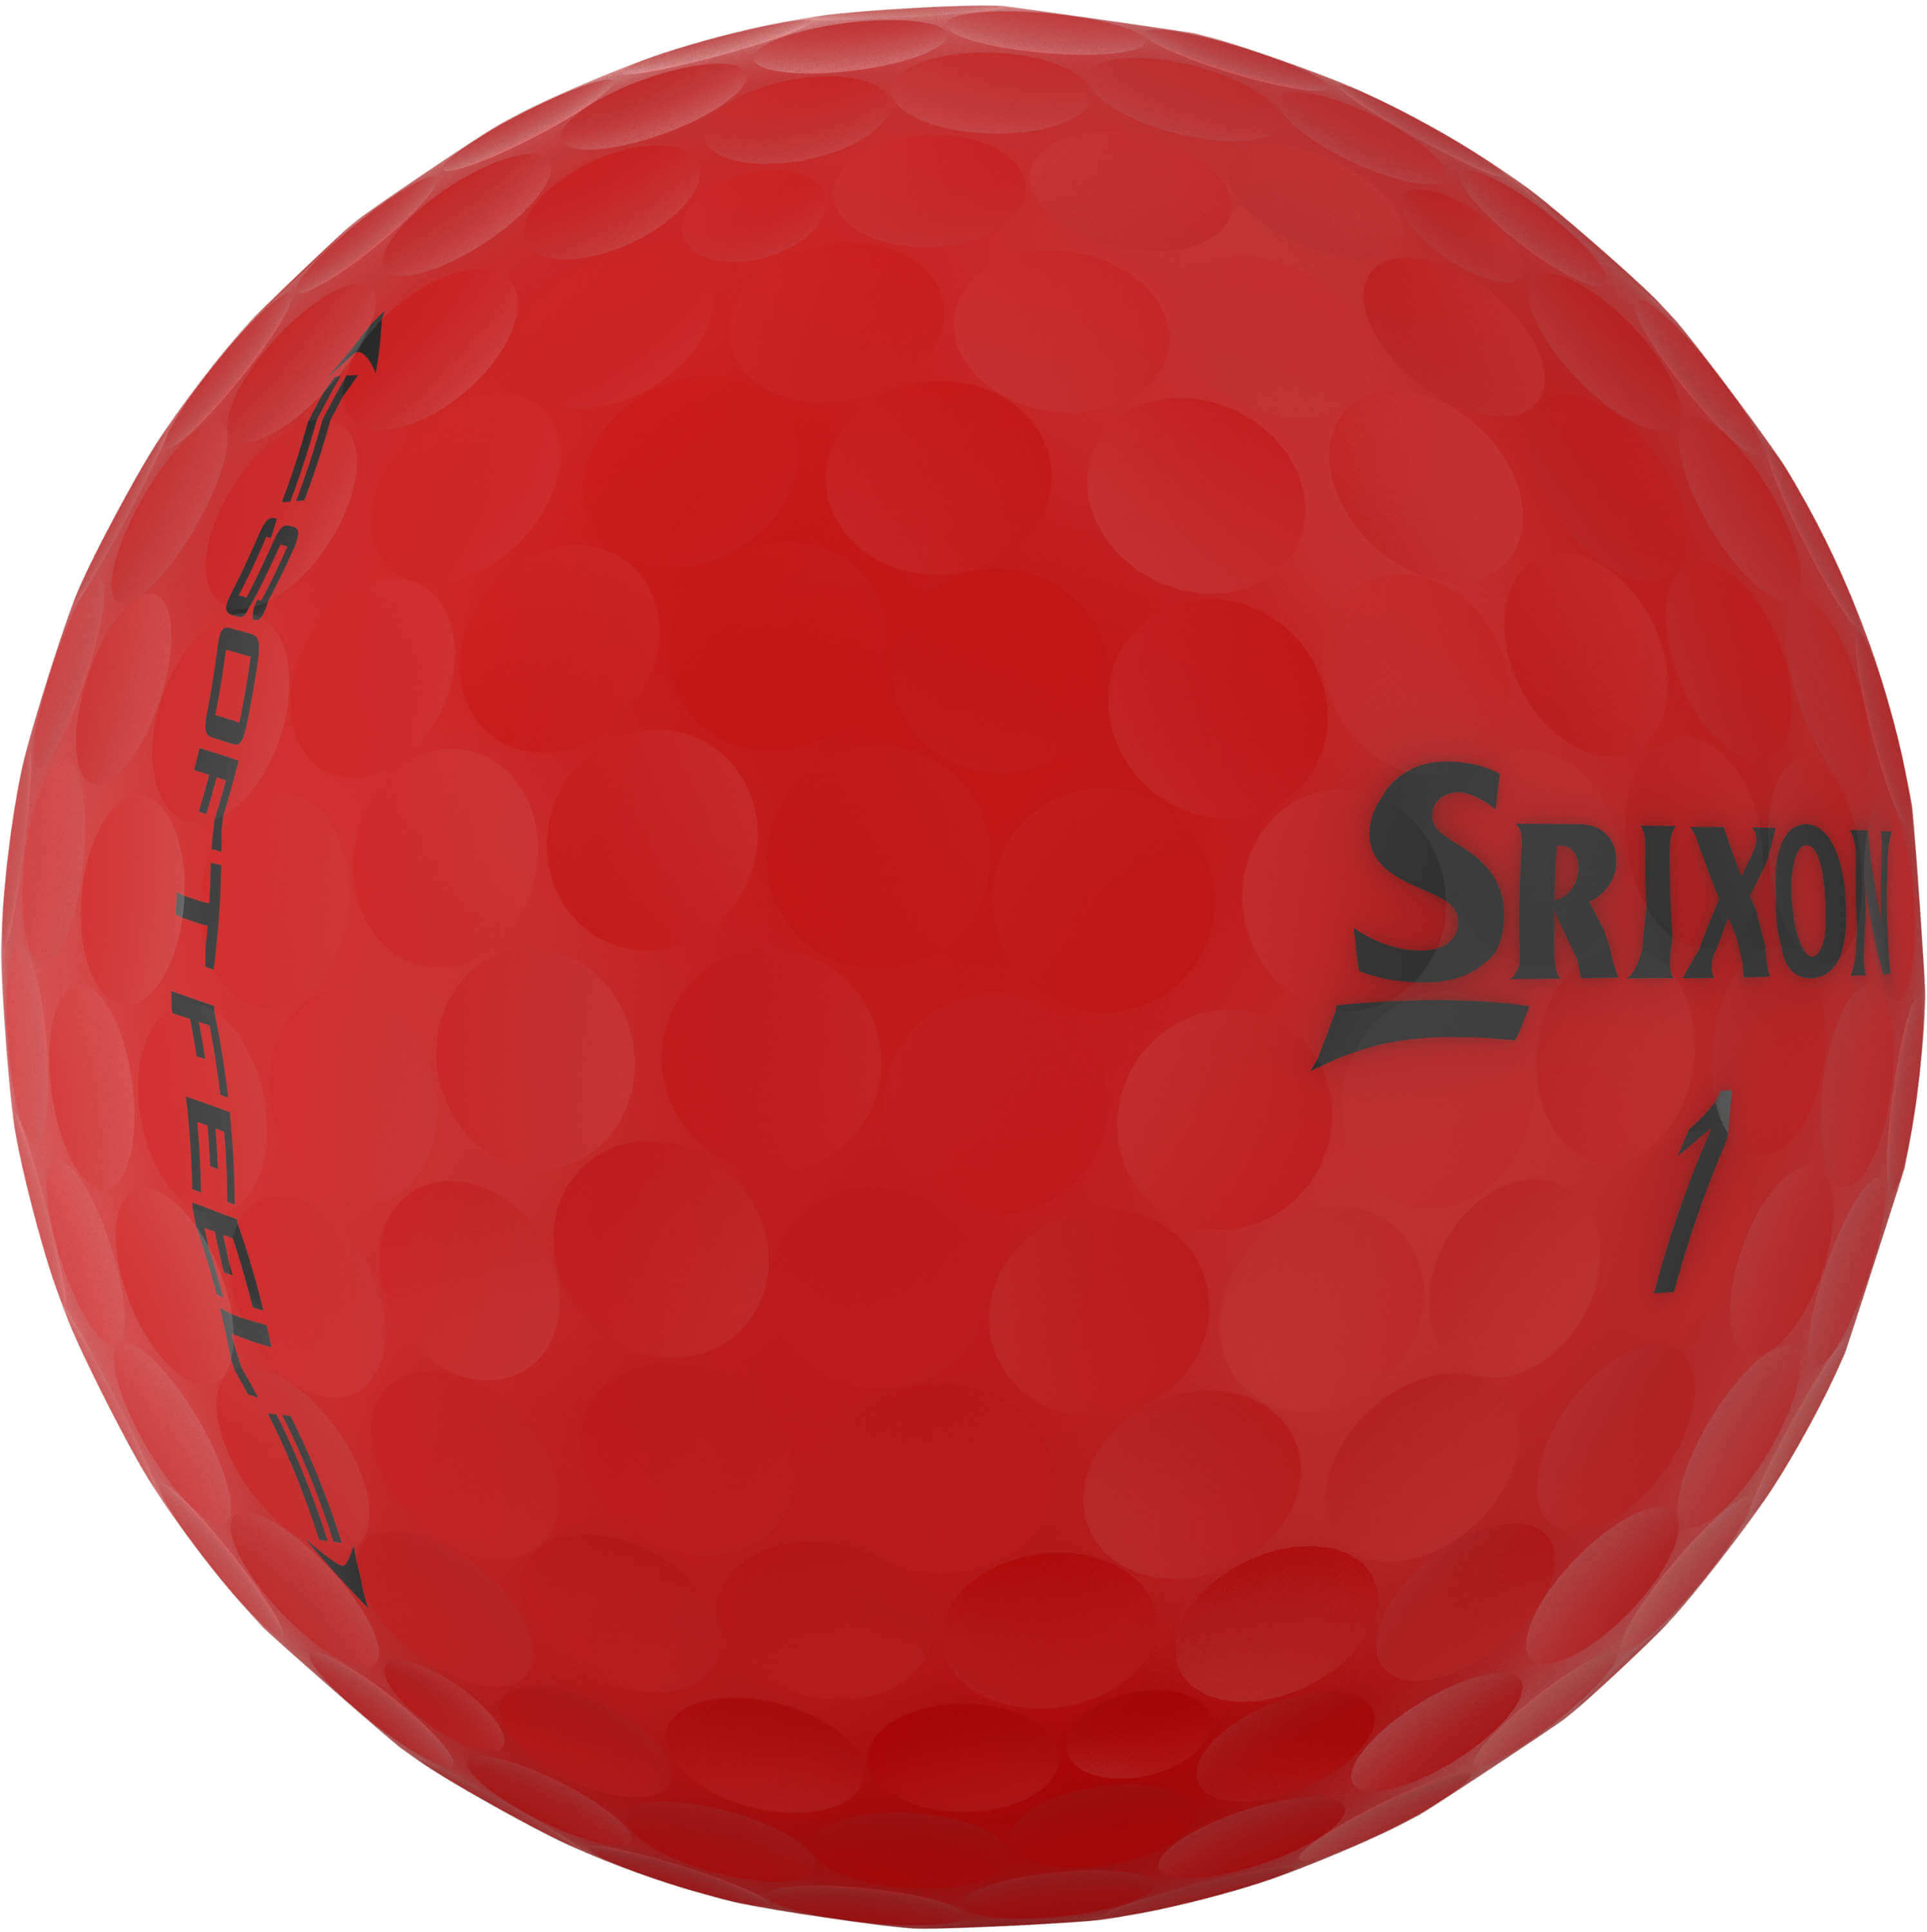 Srixon Soft Feel Golfbälle, red